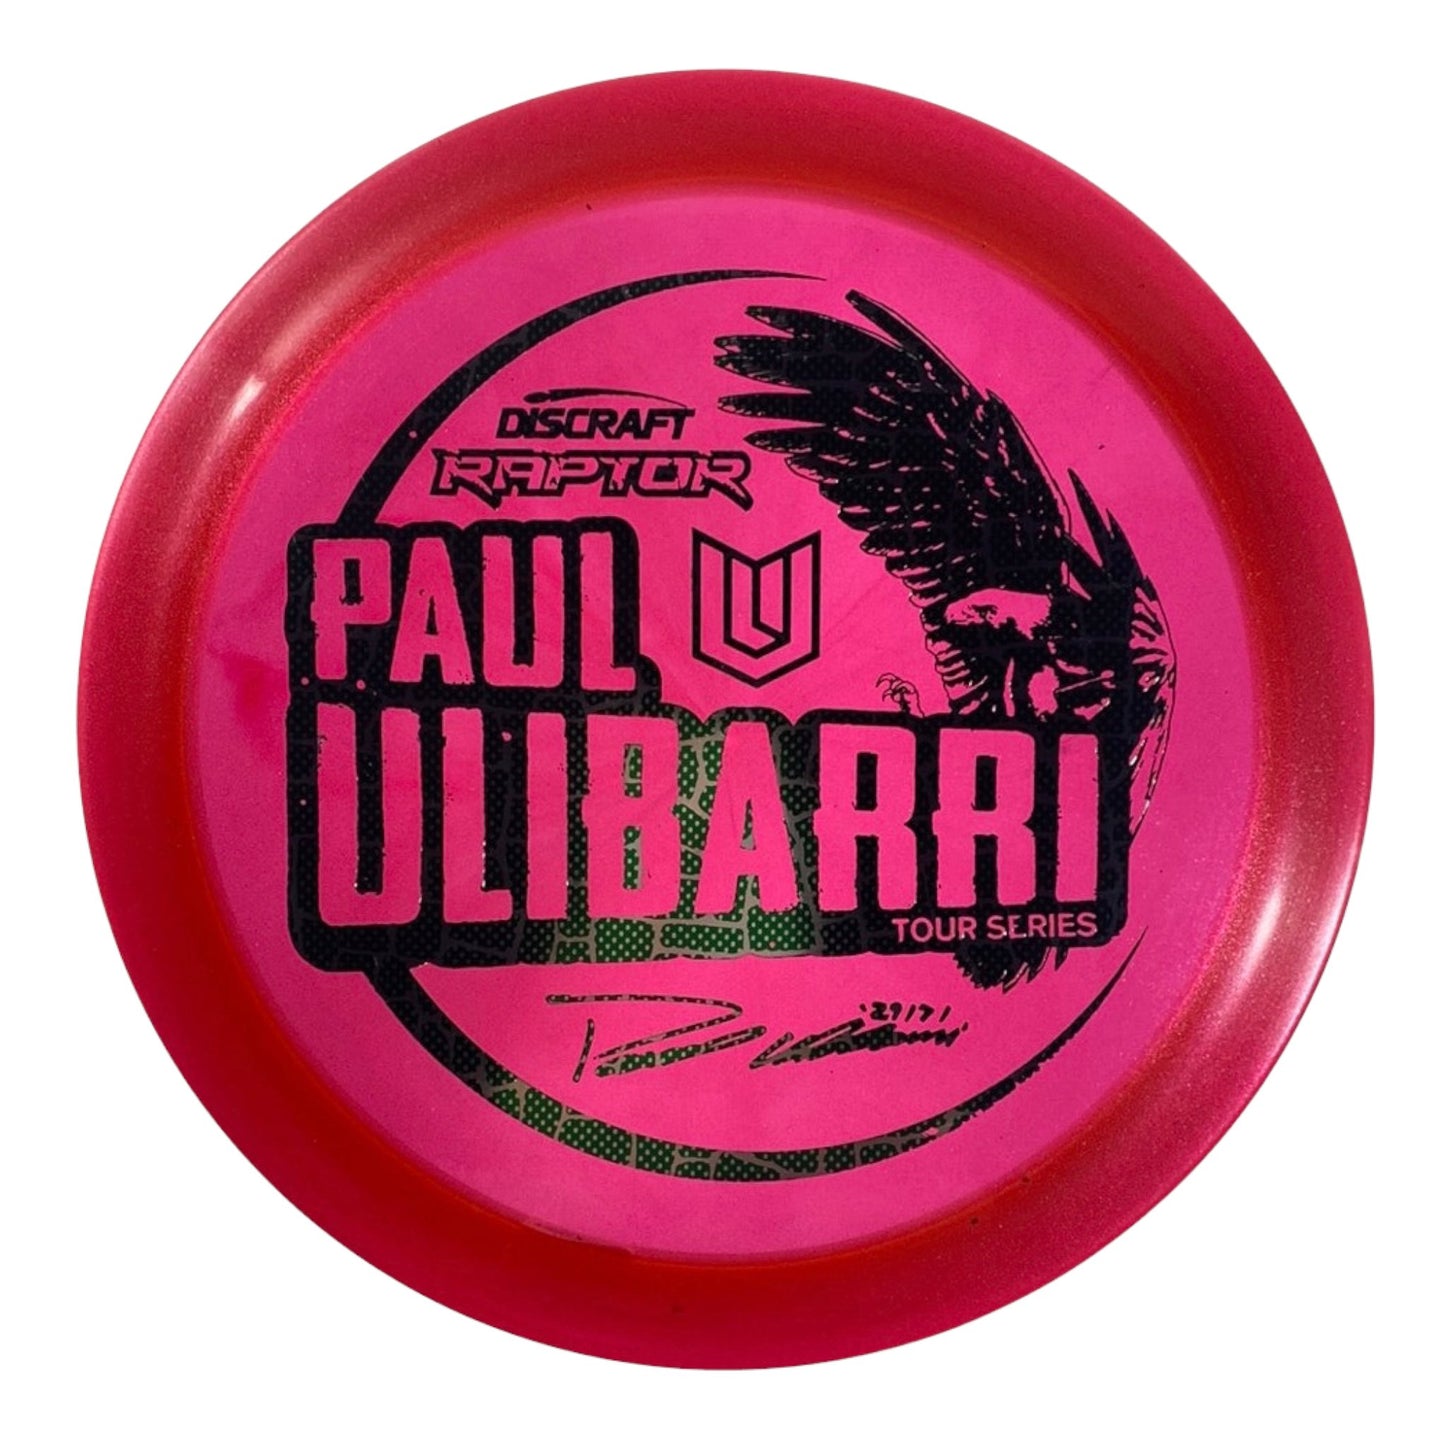 Discraft Raptor | Metallic Z | Red/Green 174g (Paul Ulibarri) Disc Golf